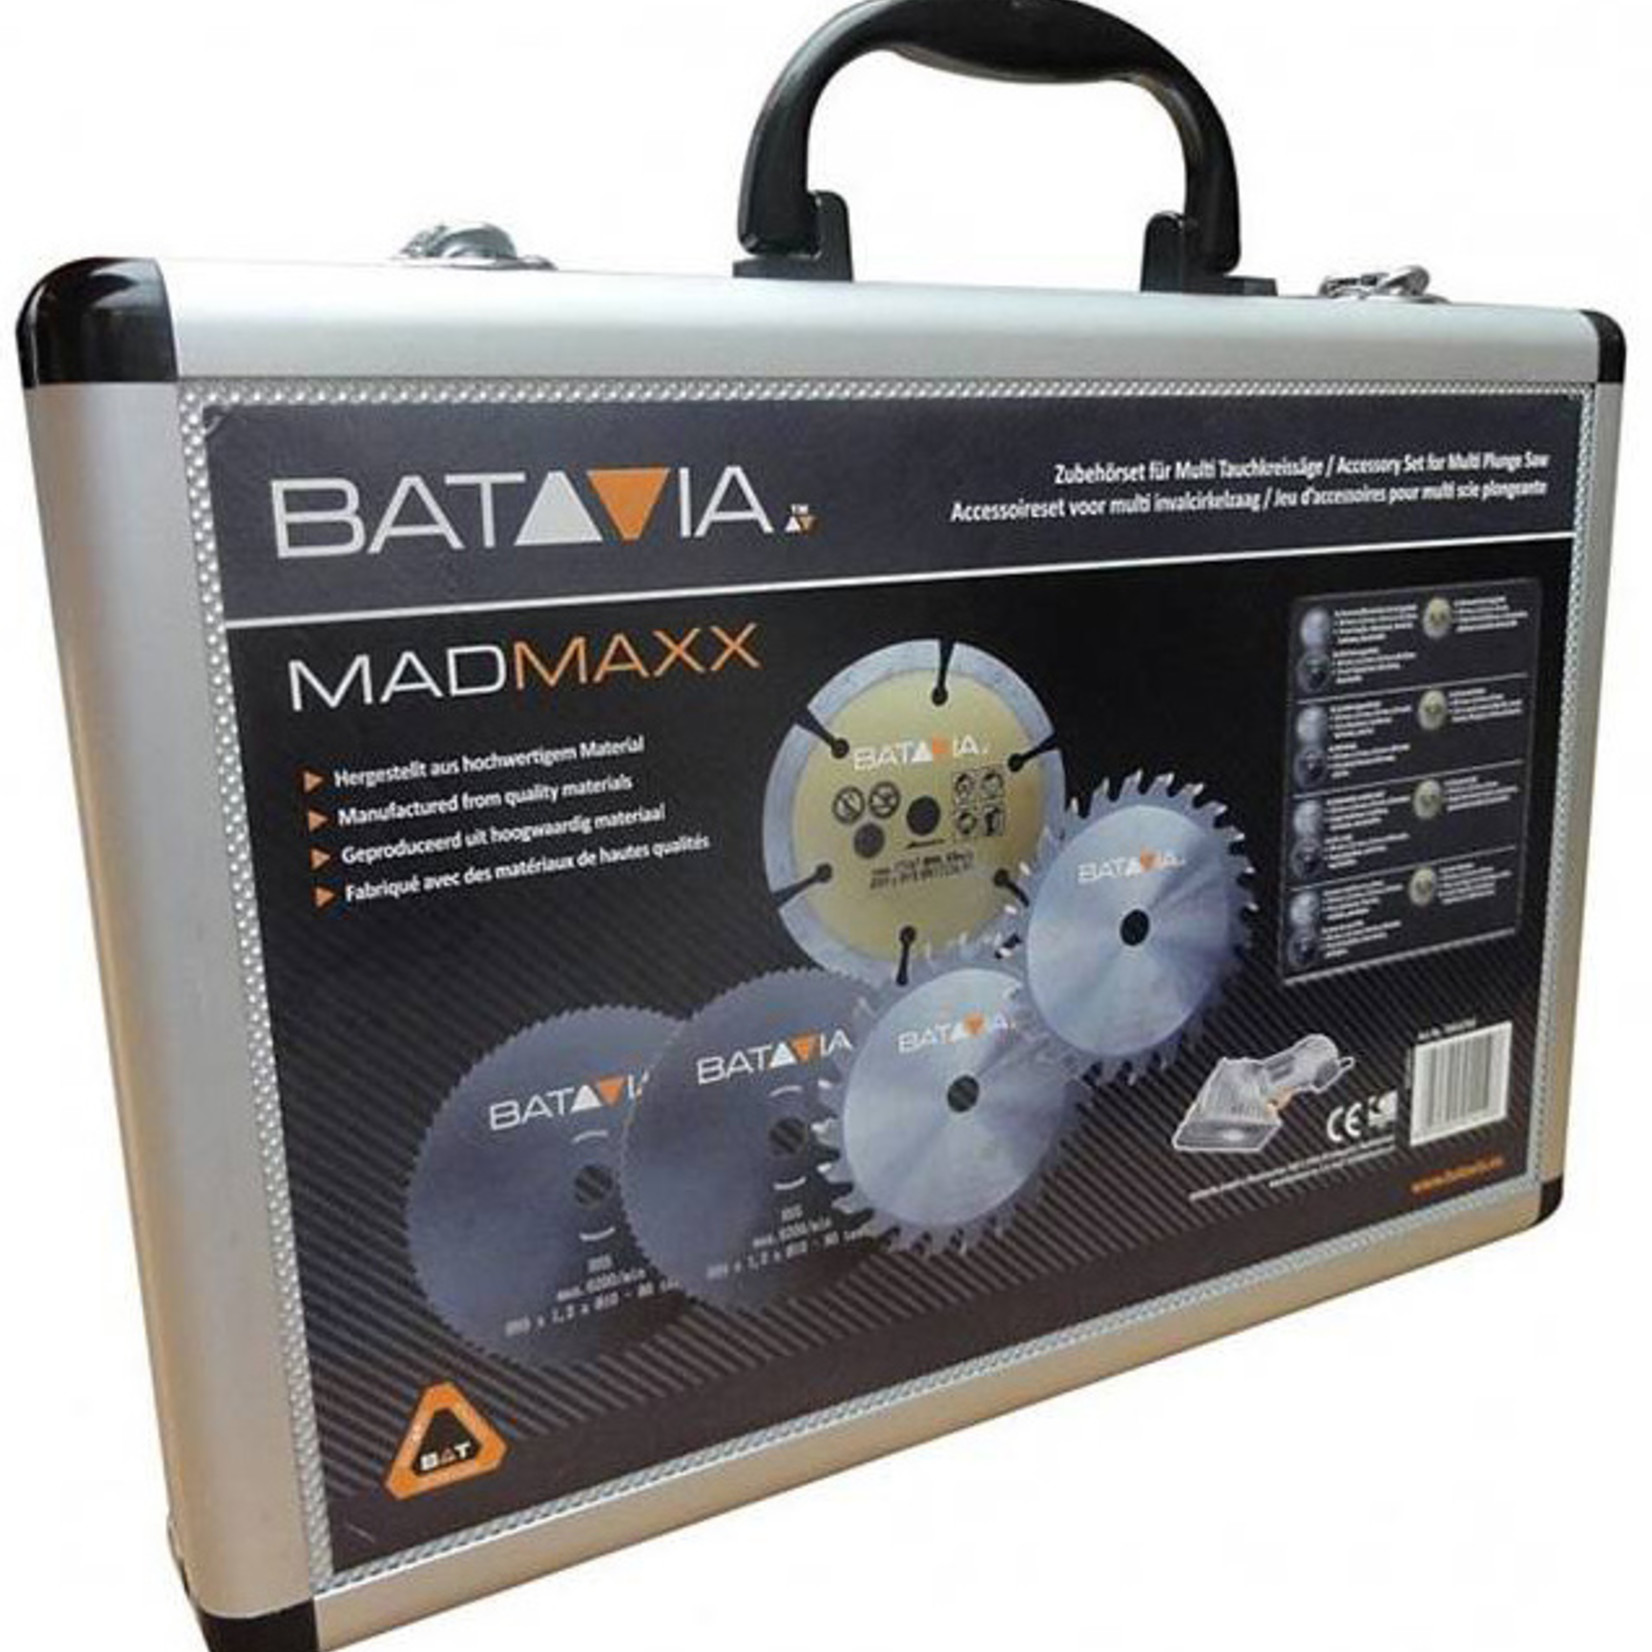 Batavia Mad Maxx zaagbladenset in alu koffer - 5 stuks 7061058 Batavia